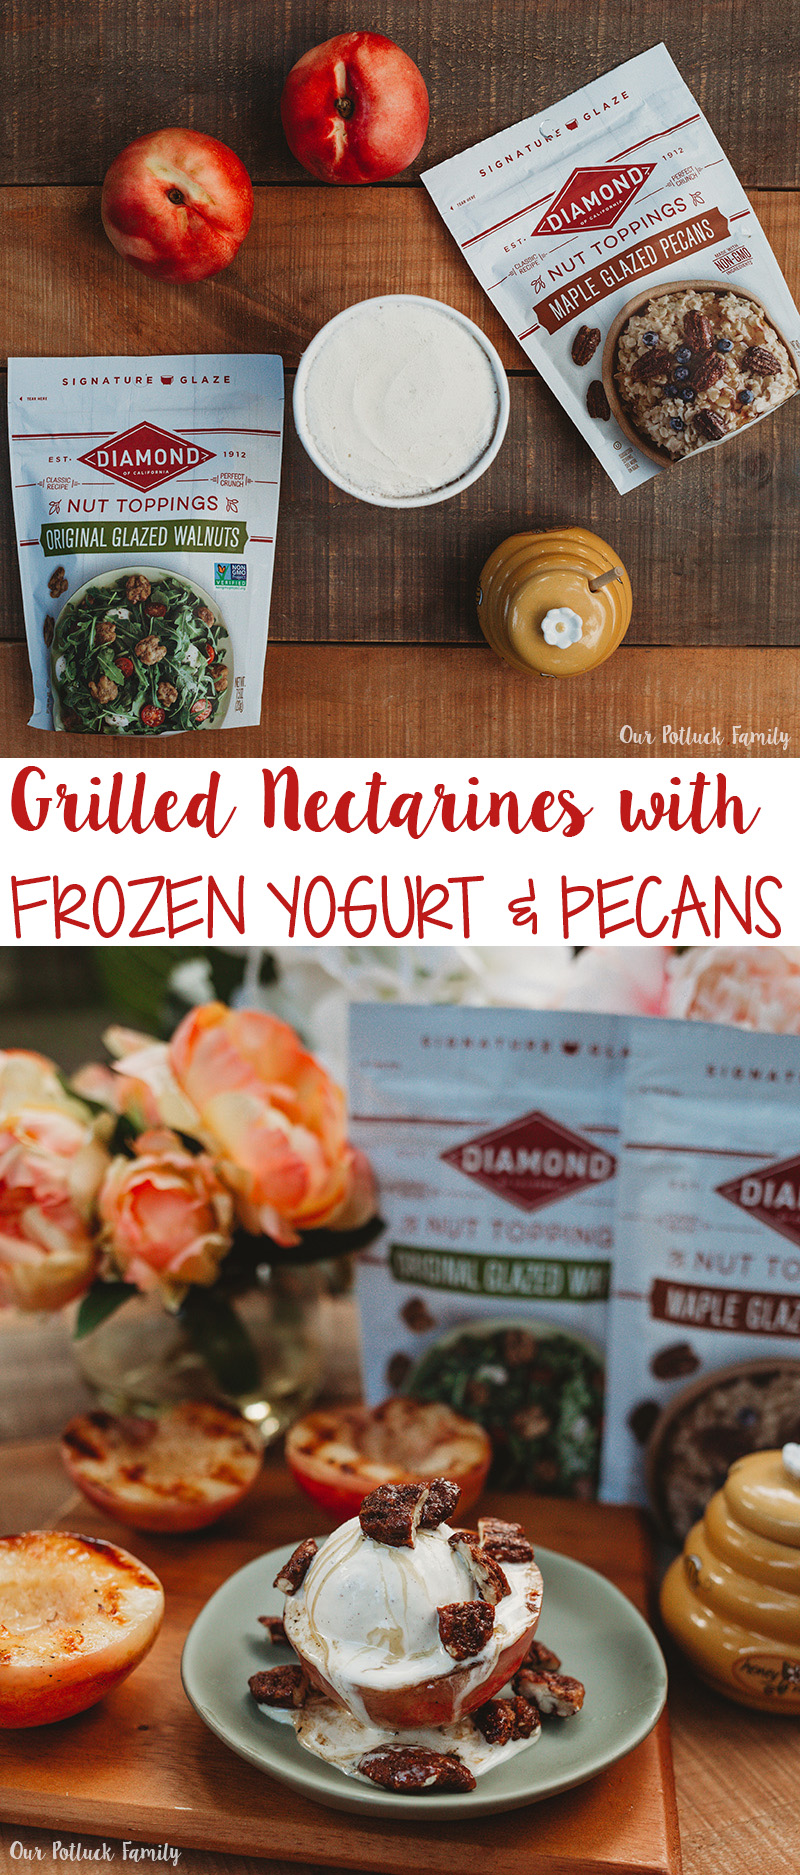 Grilled Nectarines with Frozen Yogurt & Pecans